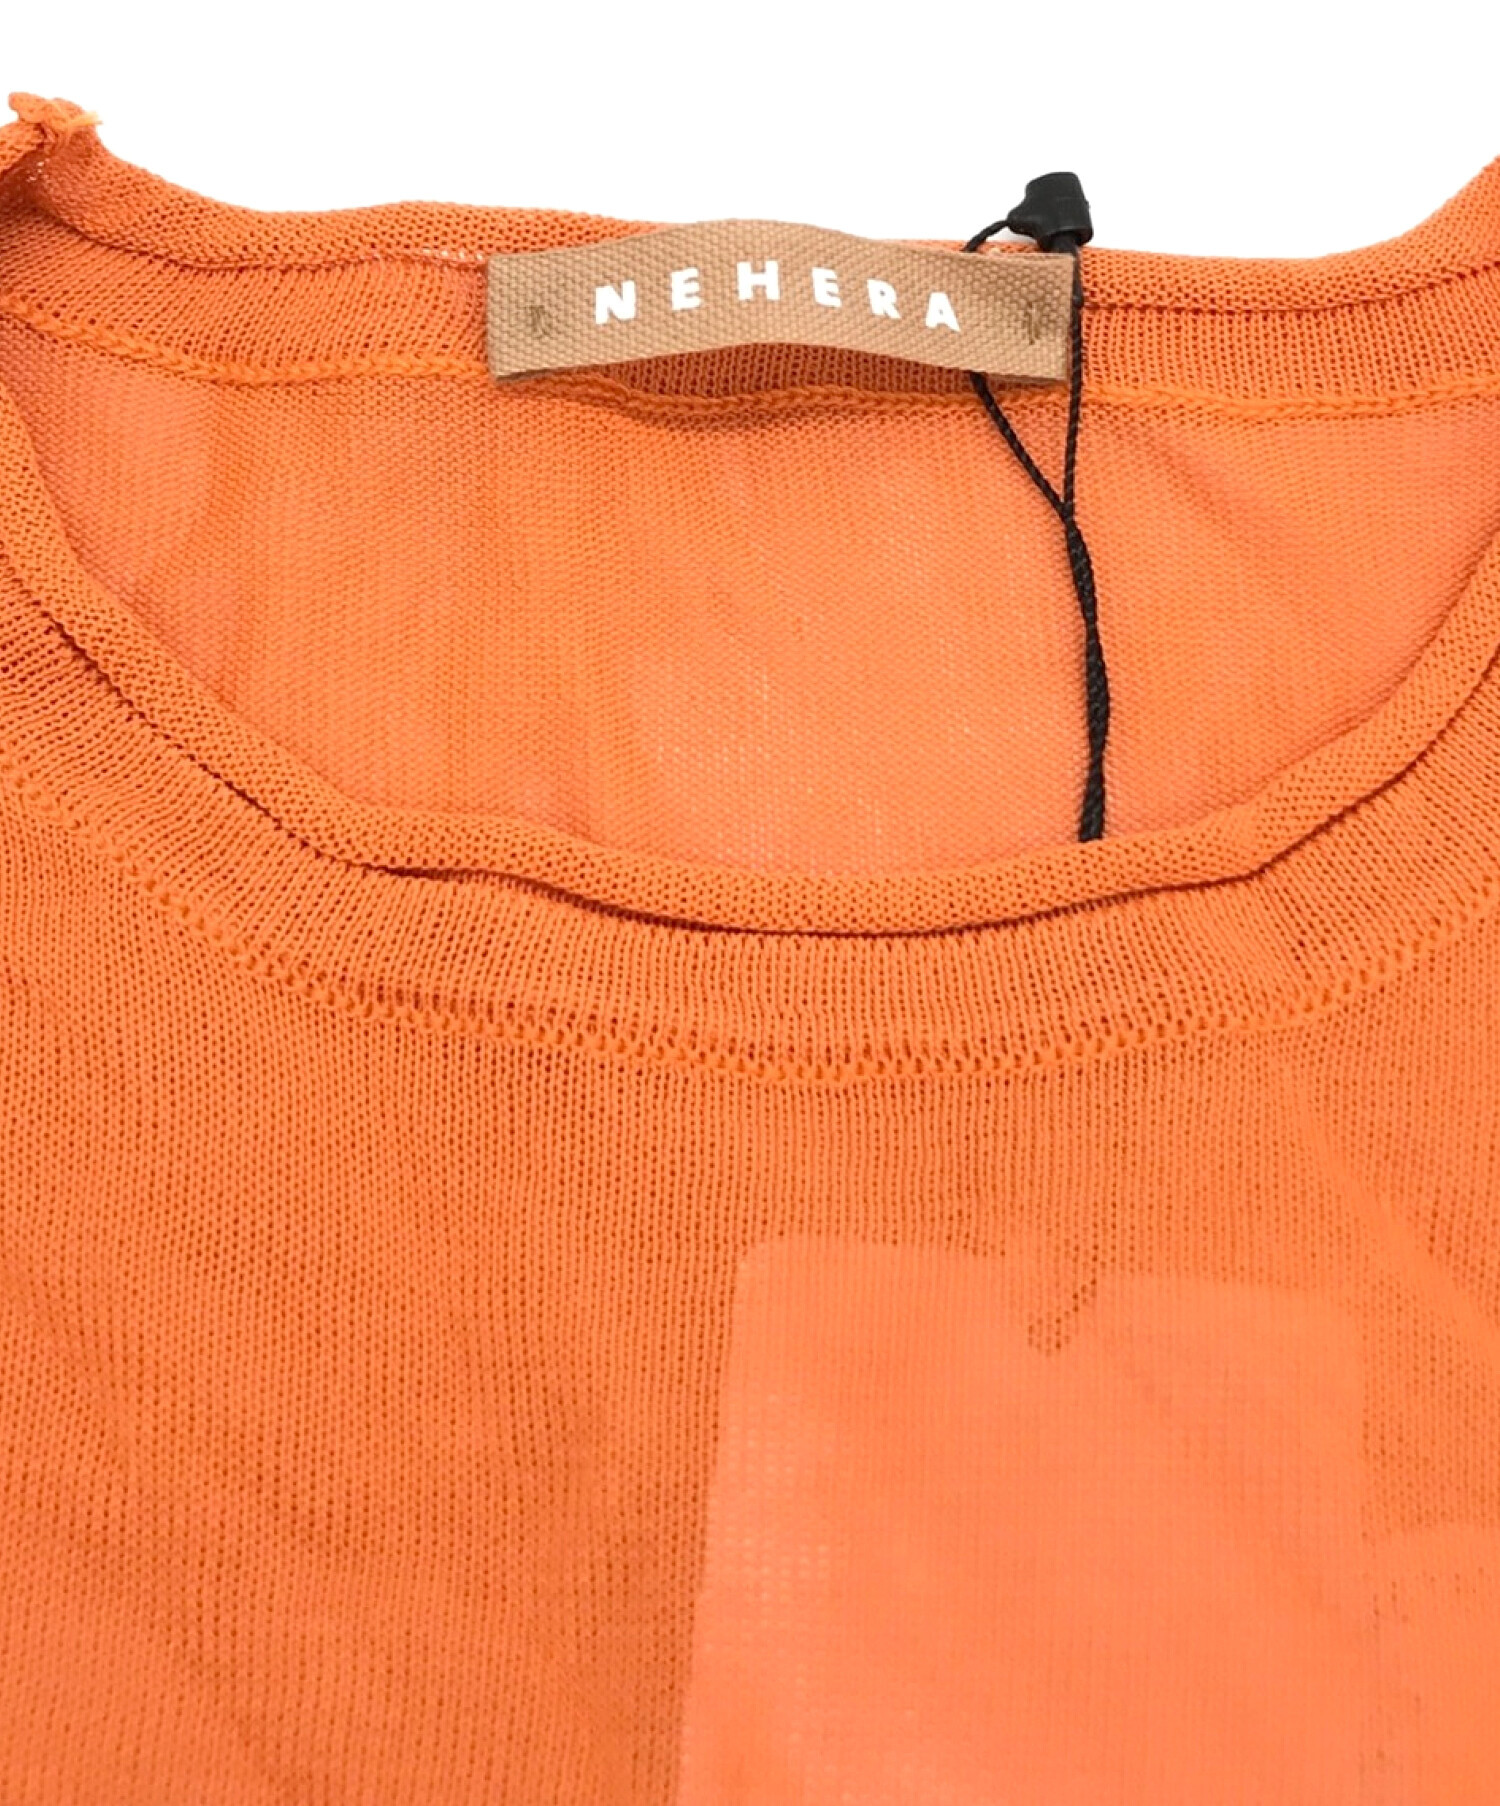 NEHERA (ネヘラ) 半袖ニット オレンジ サイズ:XS 未使用品